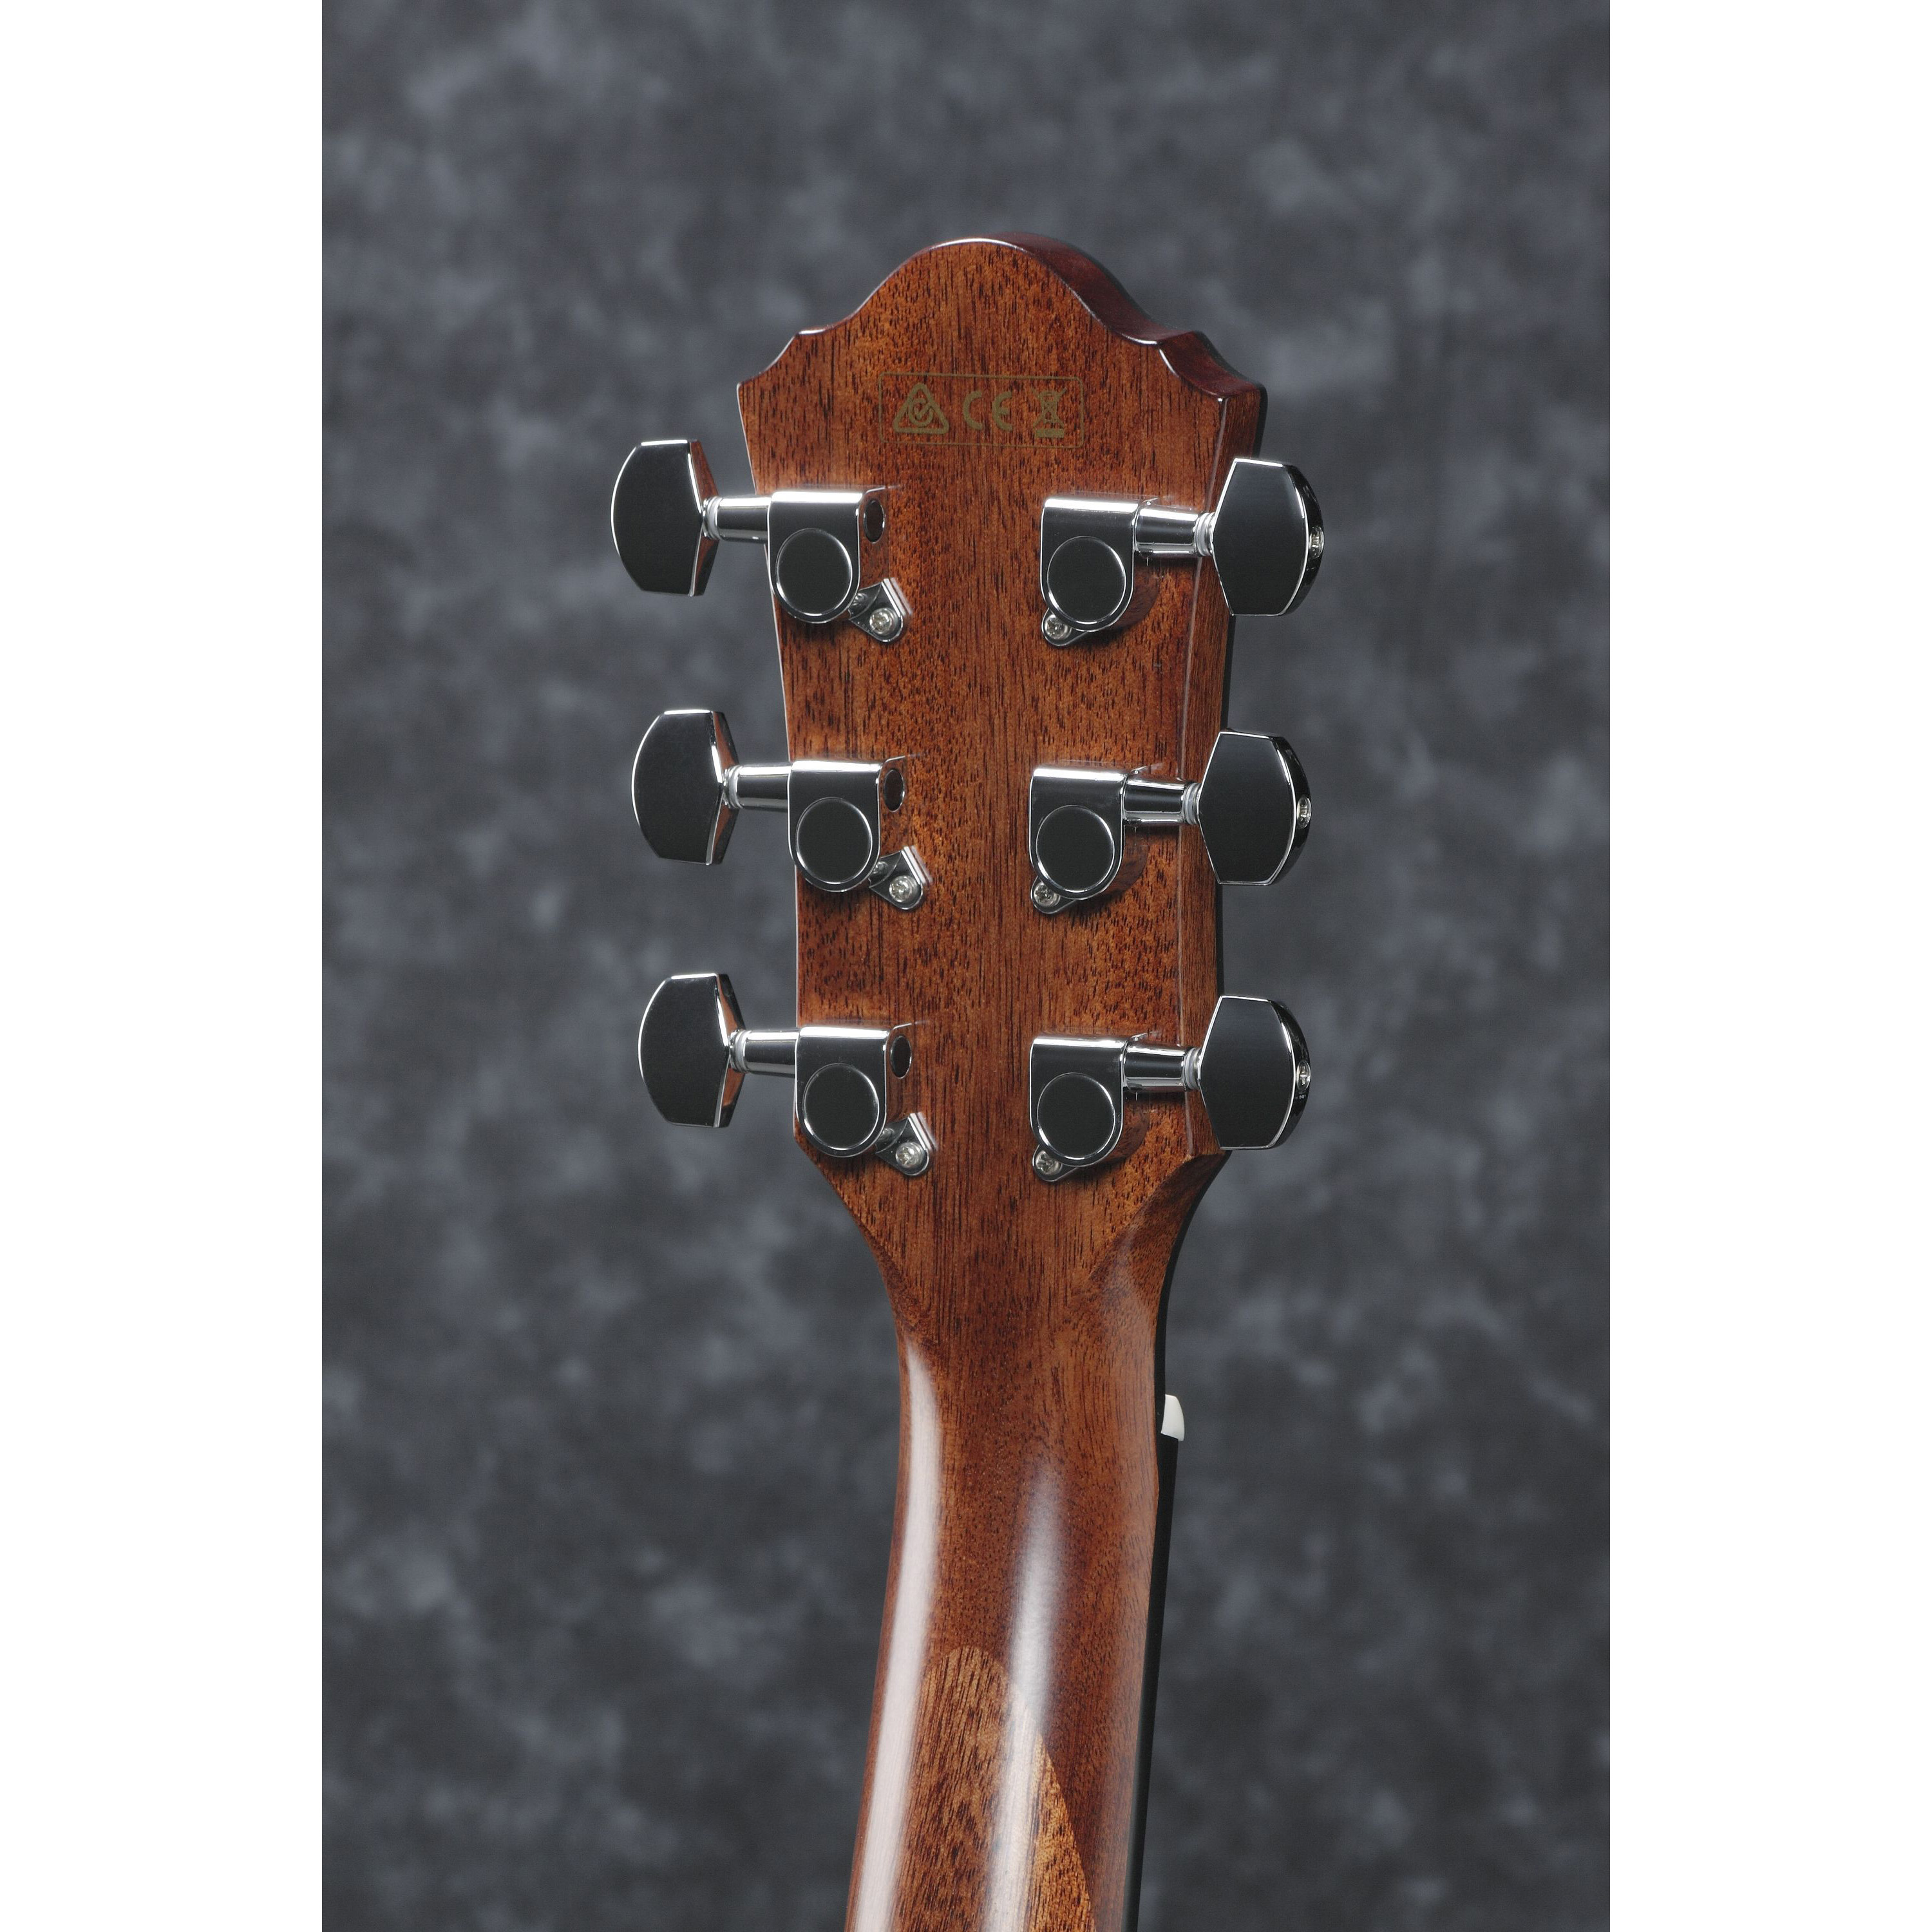 Ibanez AEG220-LGS Акустические гитары